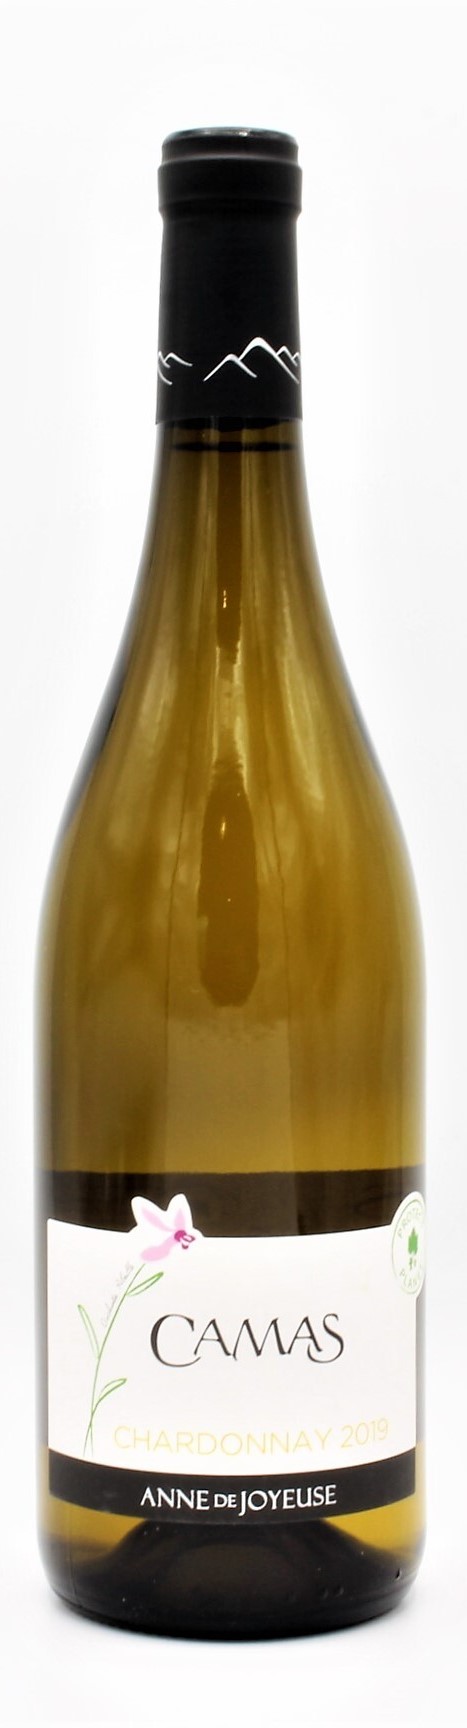 Joyeuse - Camas Chardonnay IGP 2019 - 0,75l.